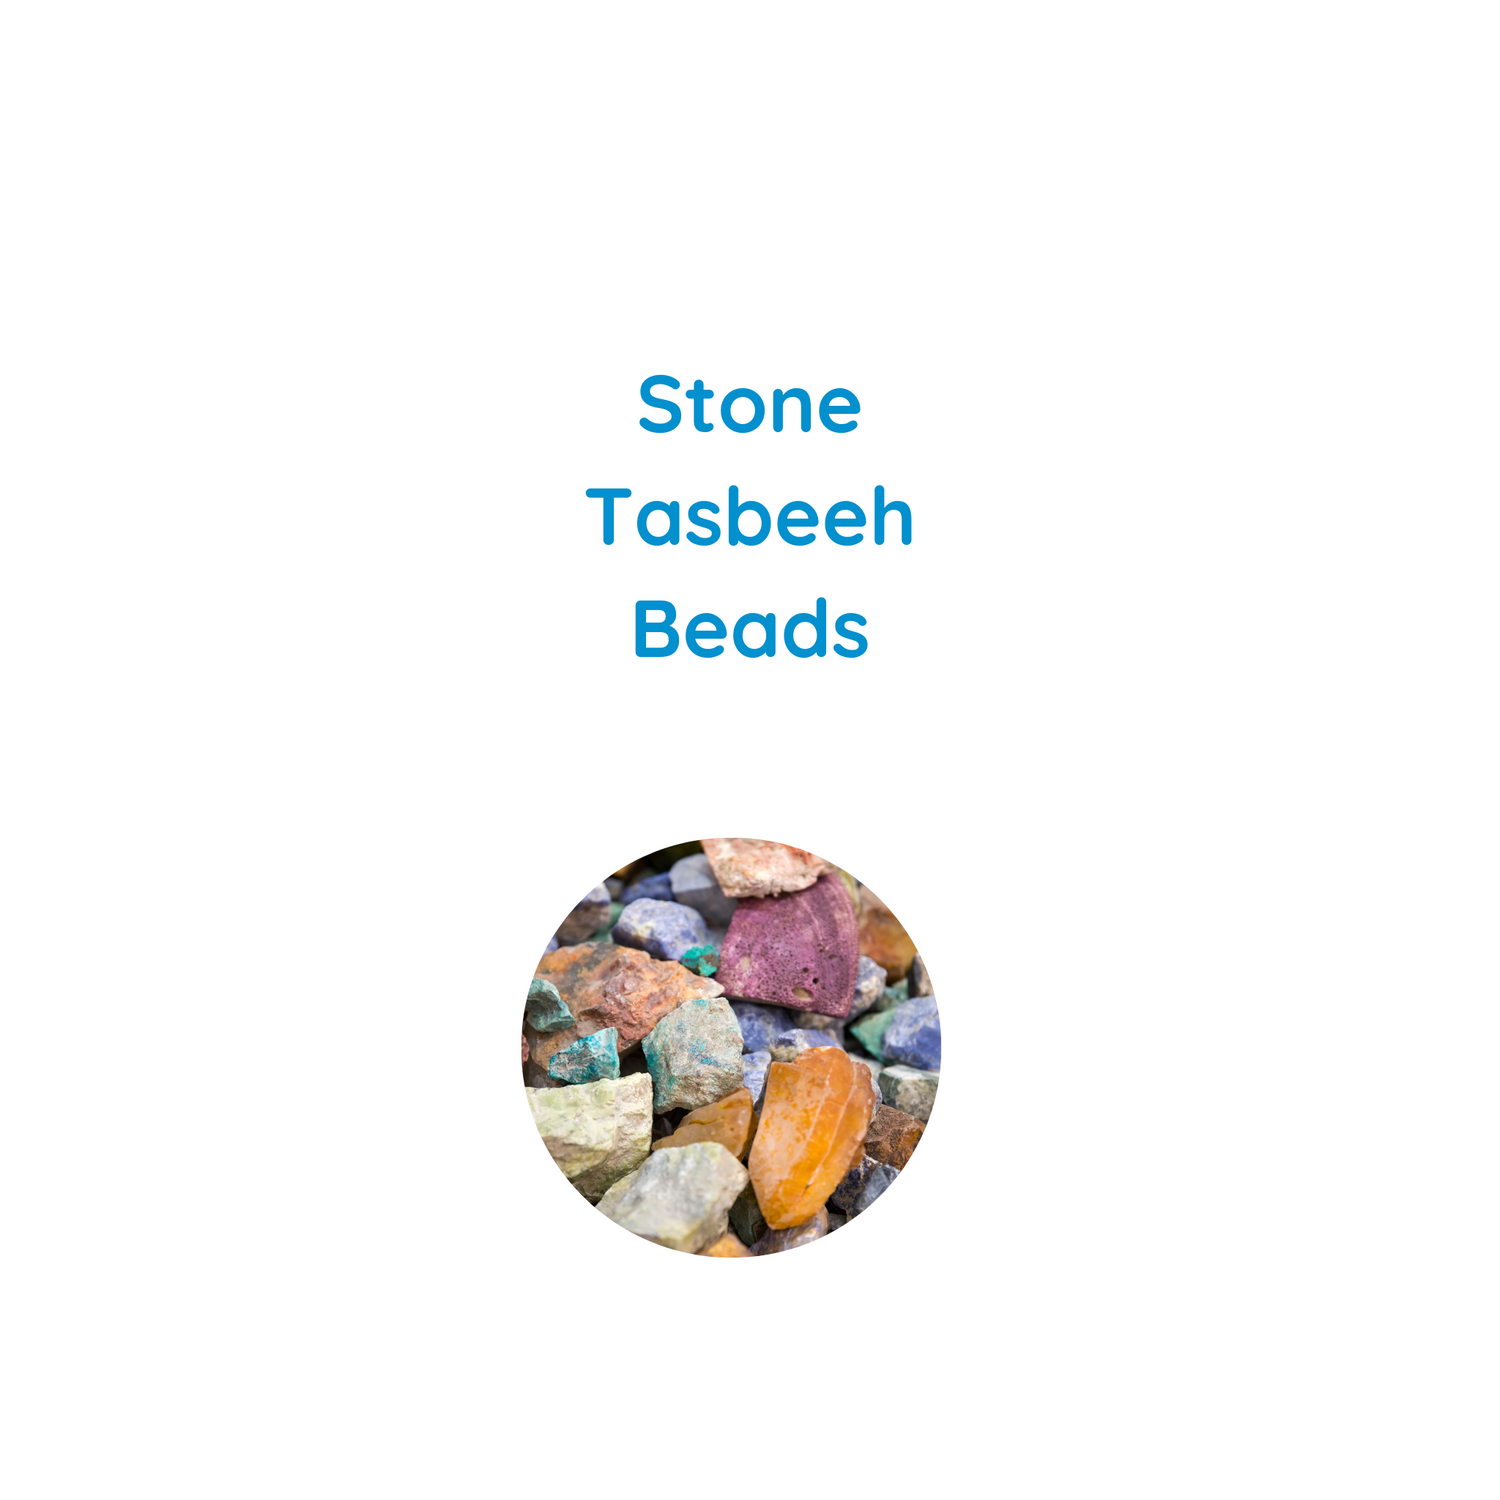 Stone Tasbeeh Beads